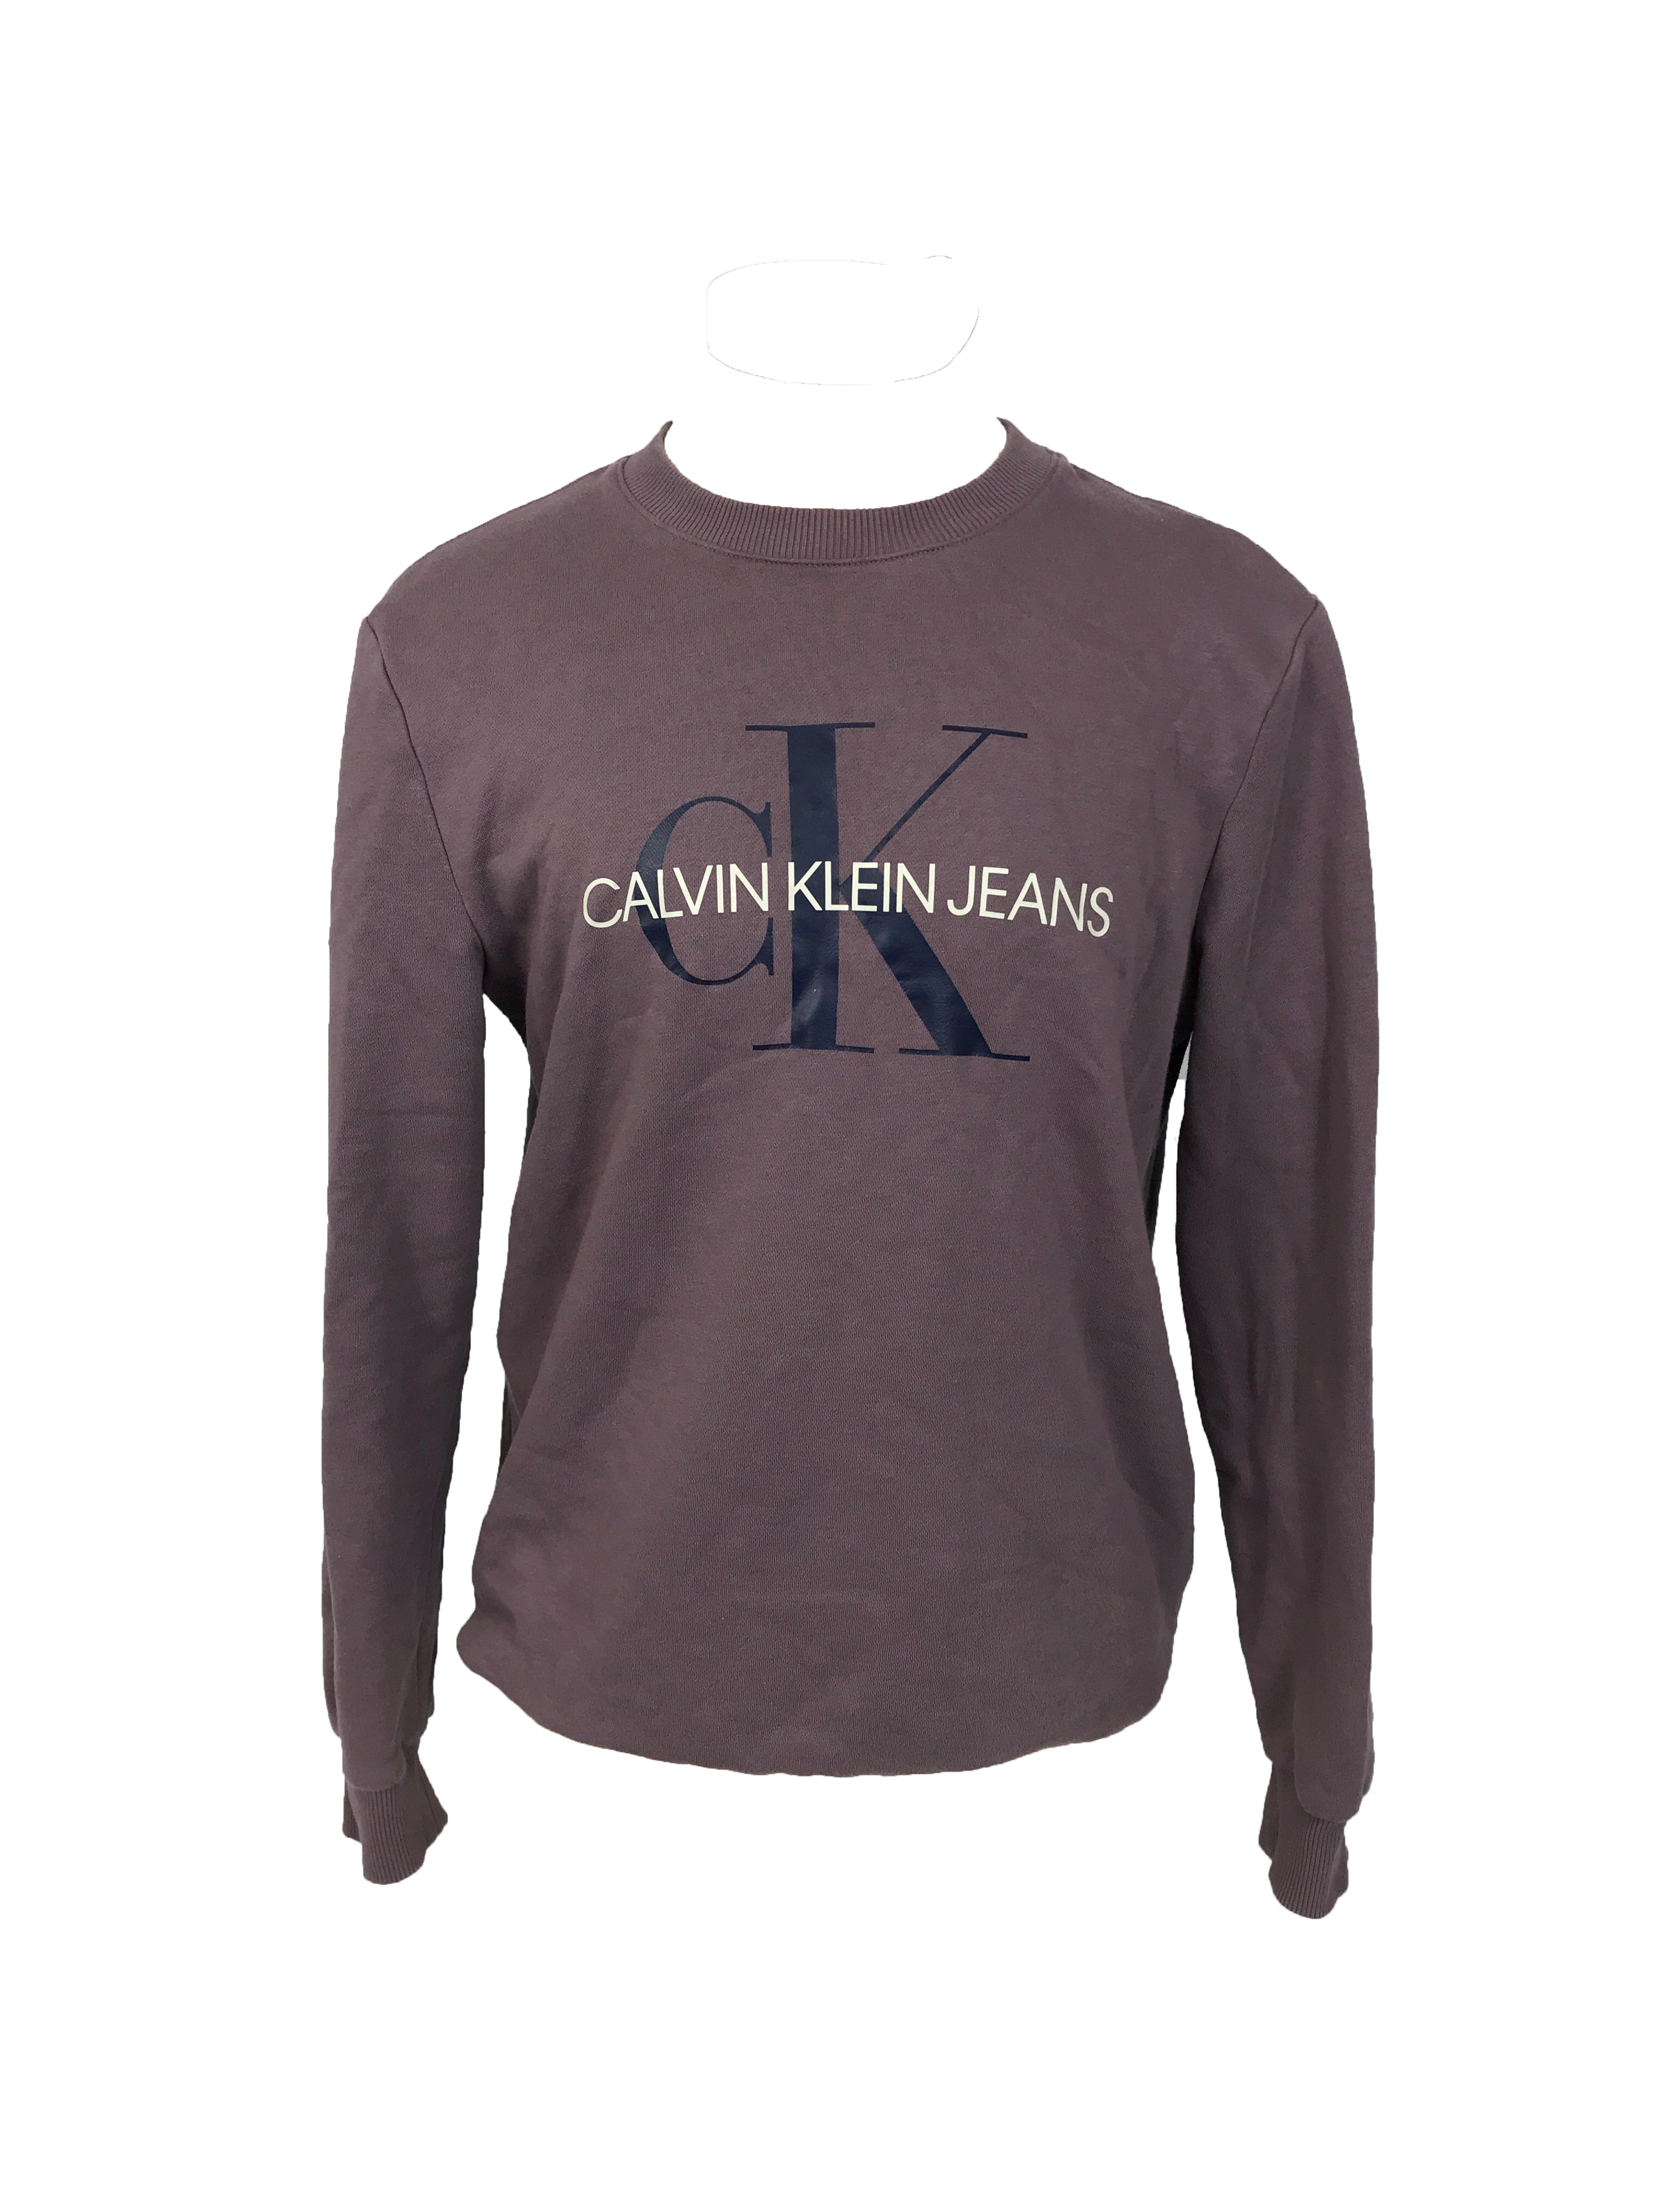 Calvin Klein Jeans Purple Crew Neck Sweatshirt Women's Size M